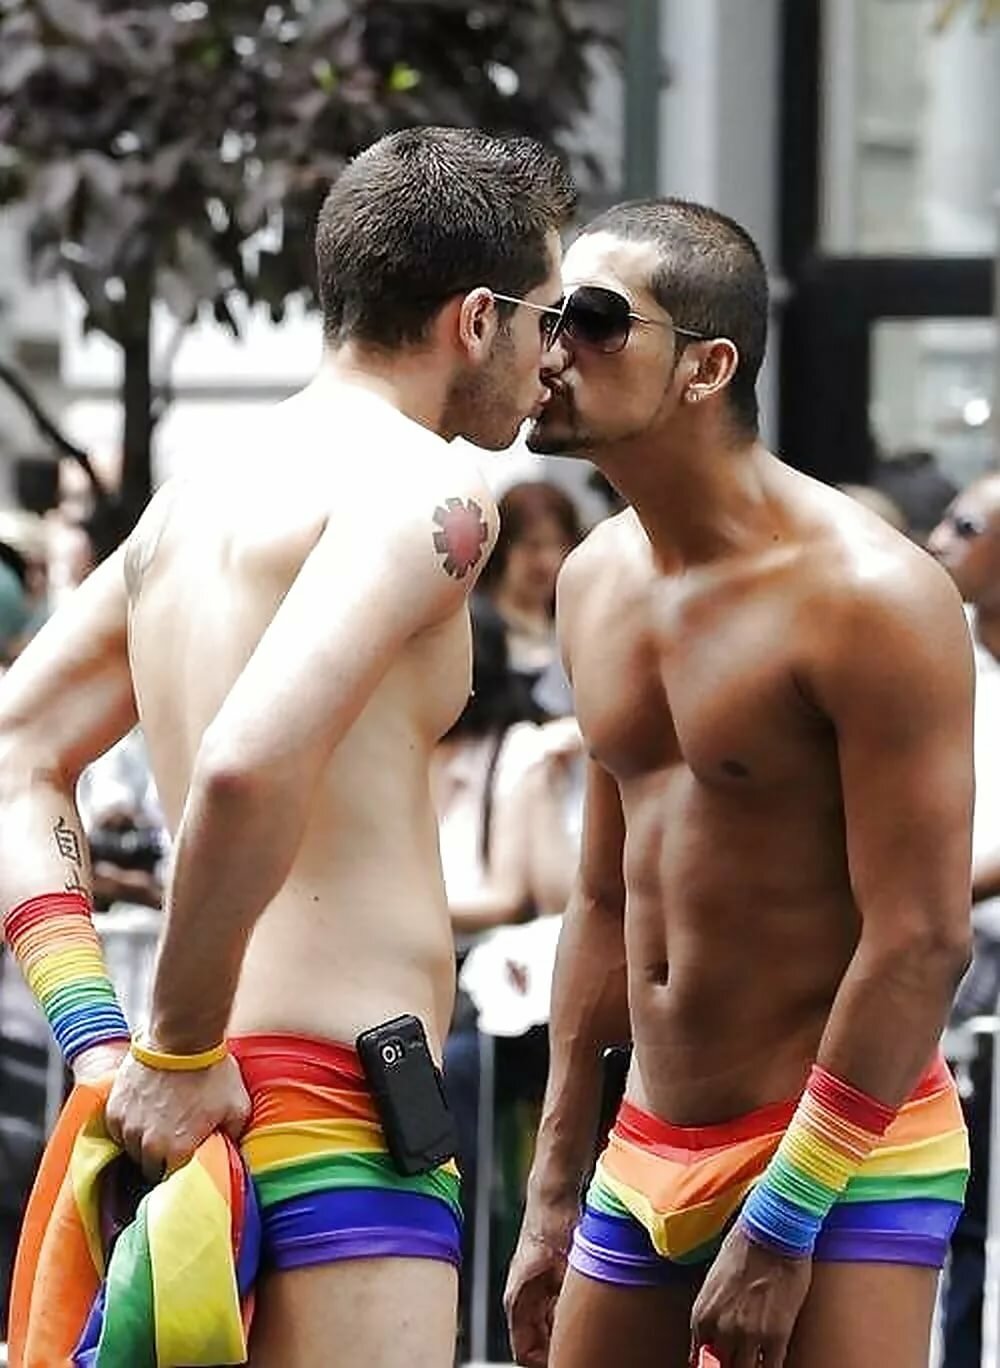 встреча геев на улице фото 46